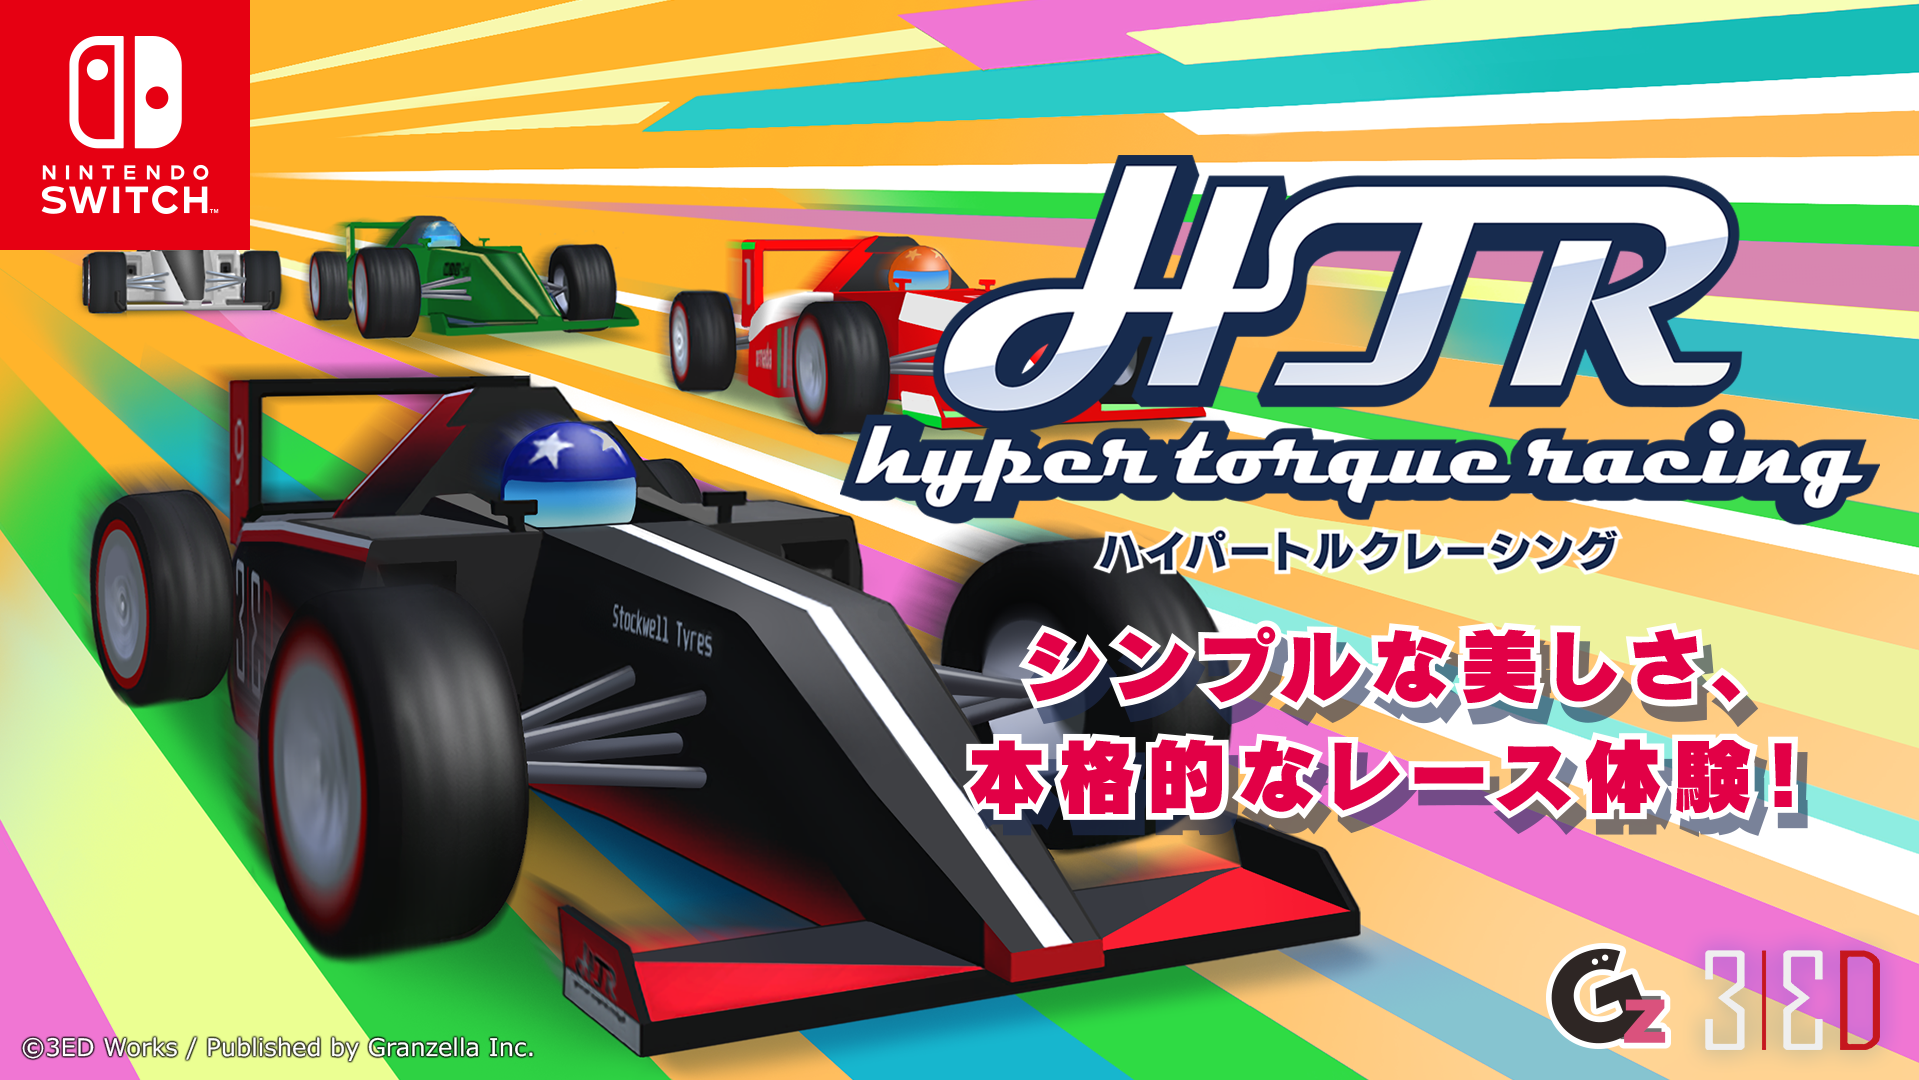 Nintendo Switch用レーシングゲーム『ハイパートルクレーシング』発売